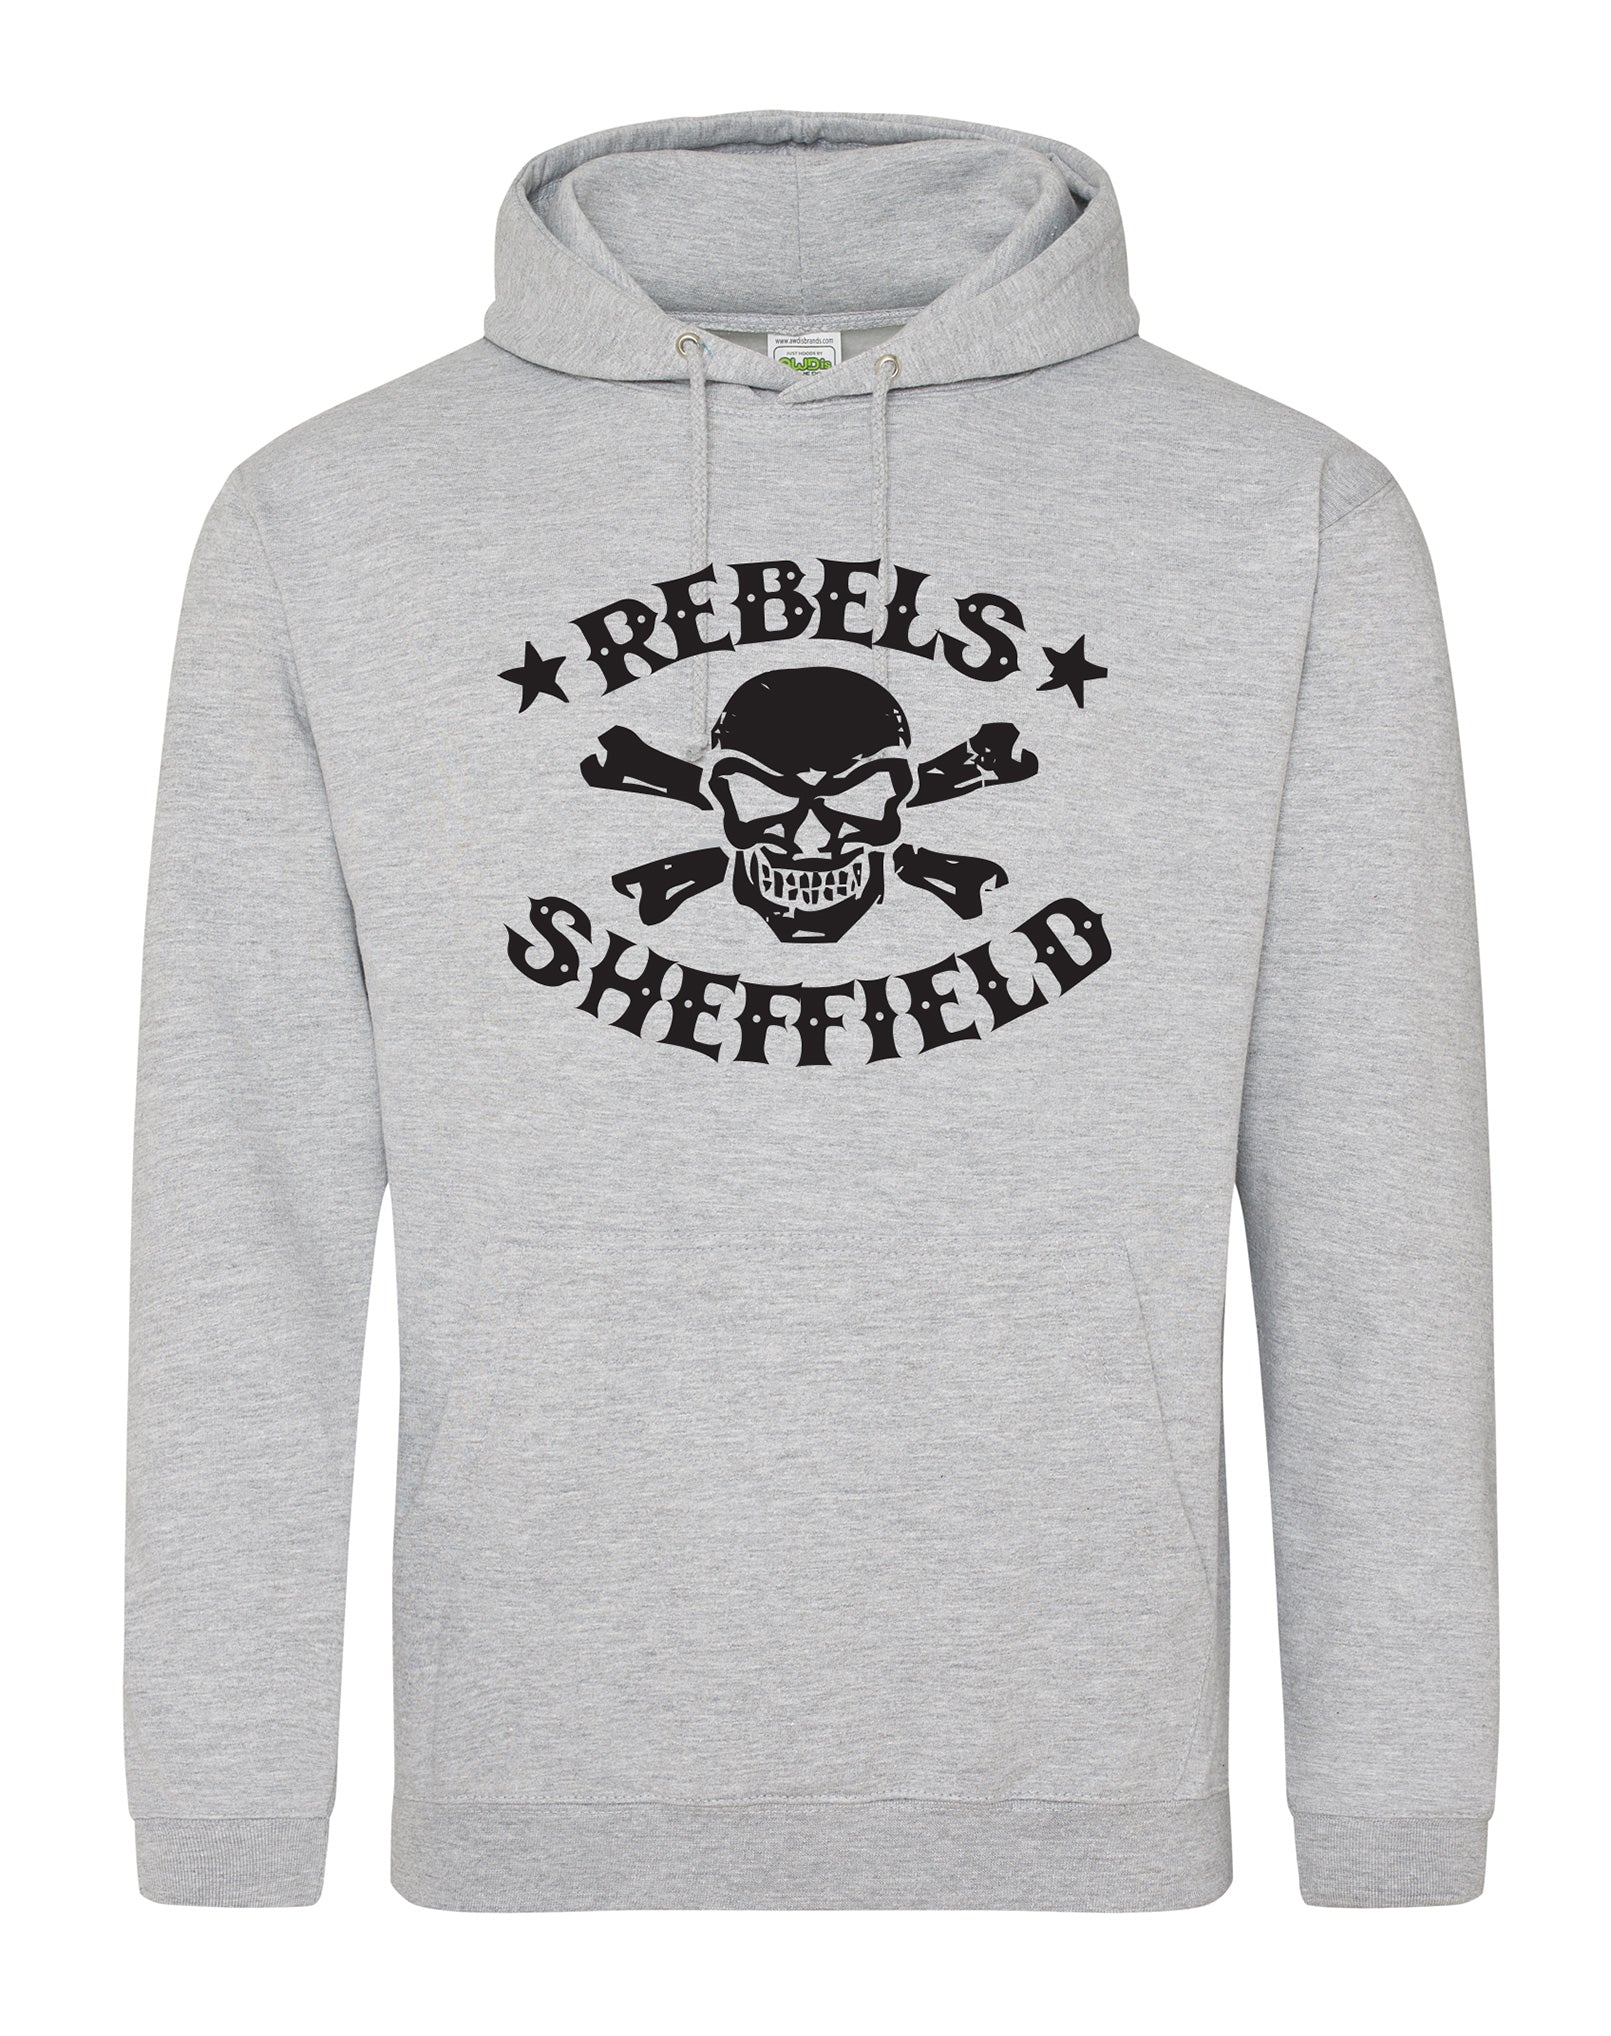 Rebels skull crossbones unisex fit hoodie - various colours - Dirty Stop Outs